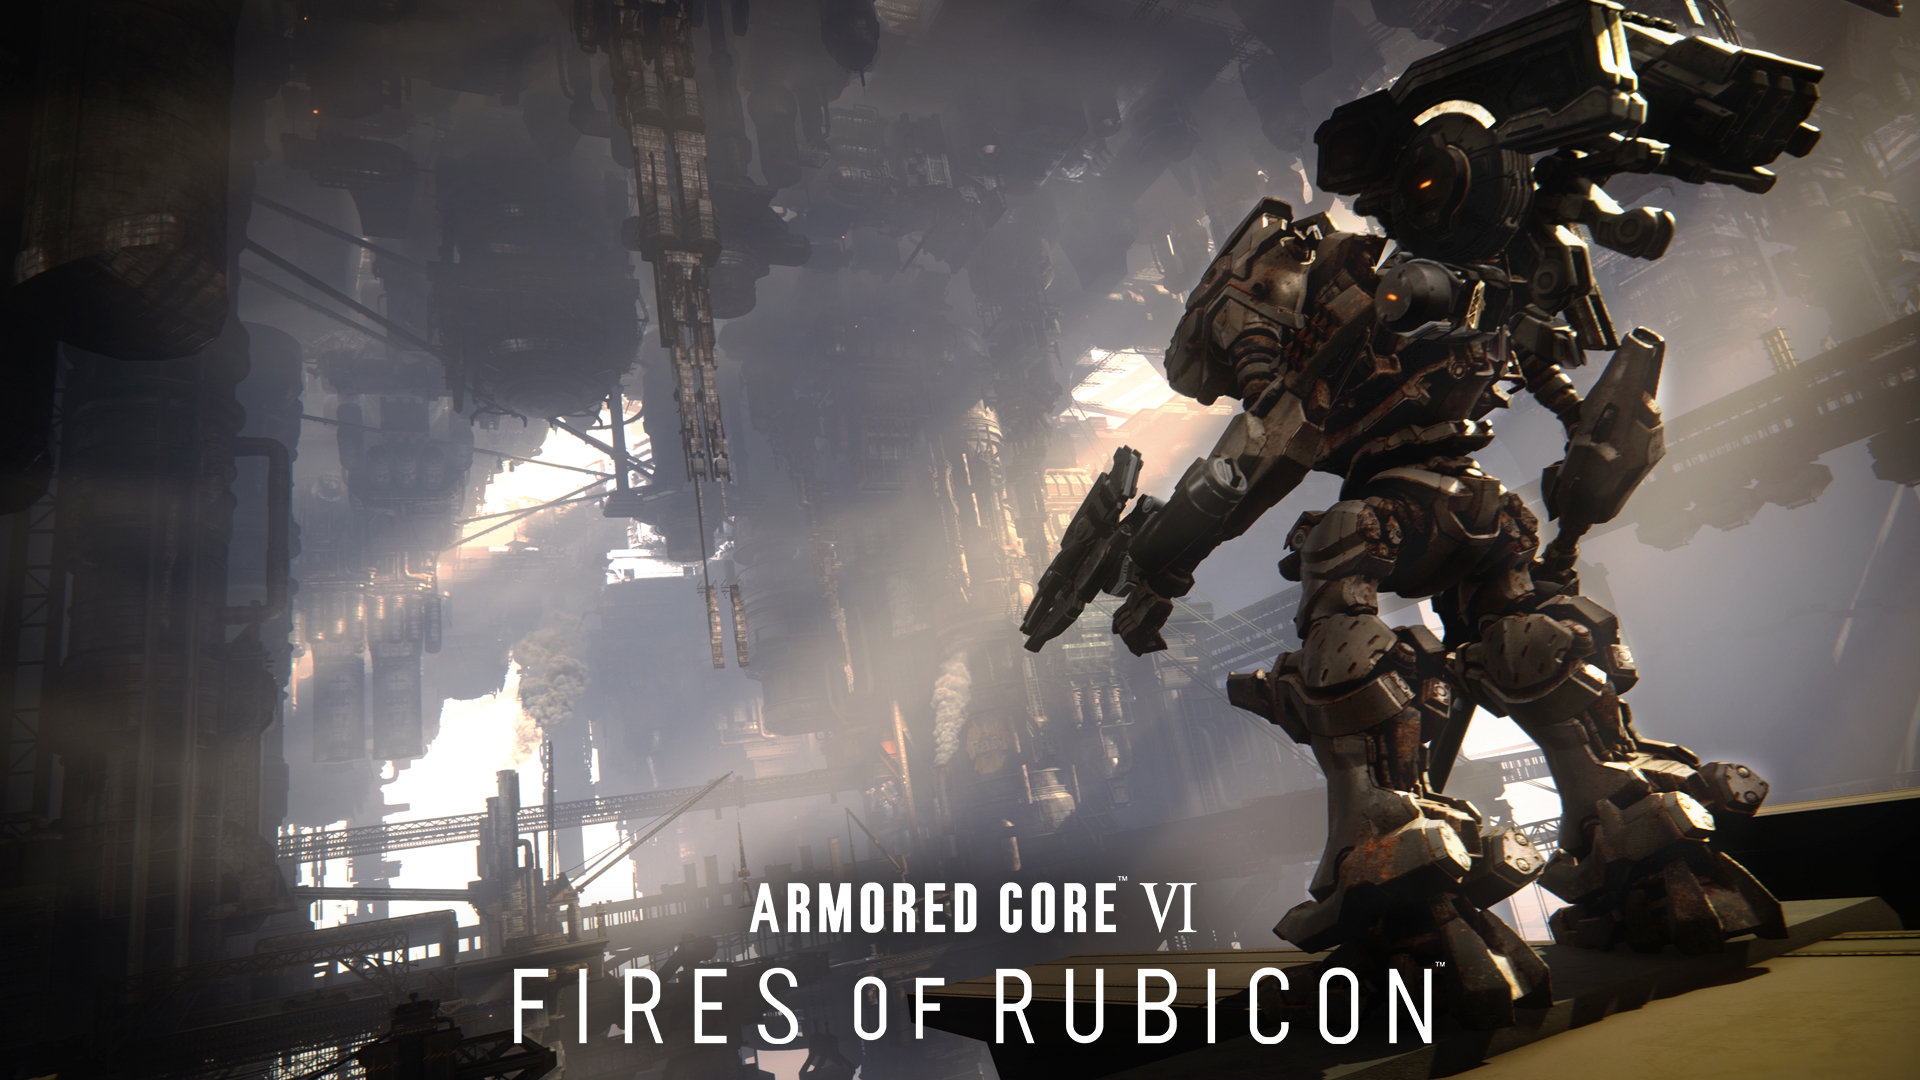 Armored Core VI: Fires of Rubicon launches August 25 - Gematsu